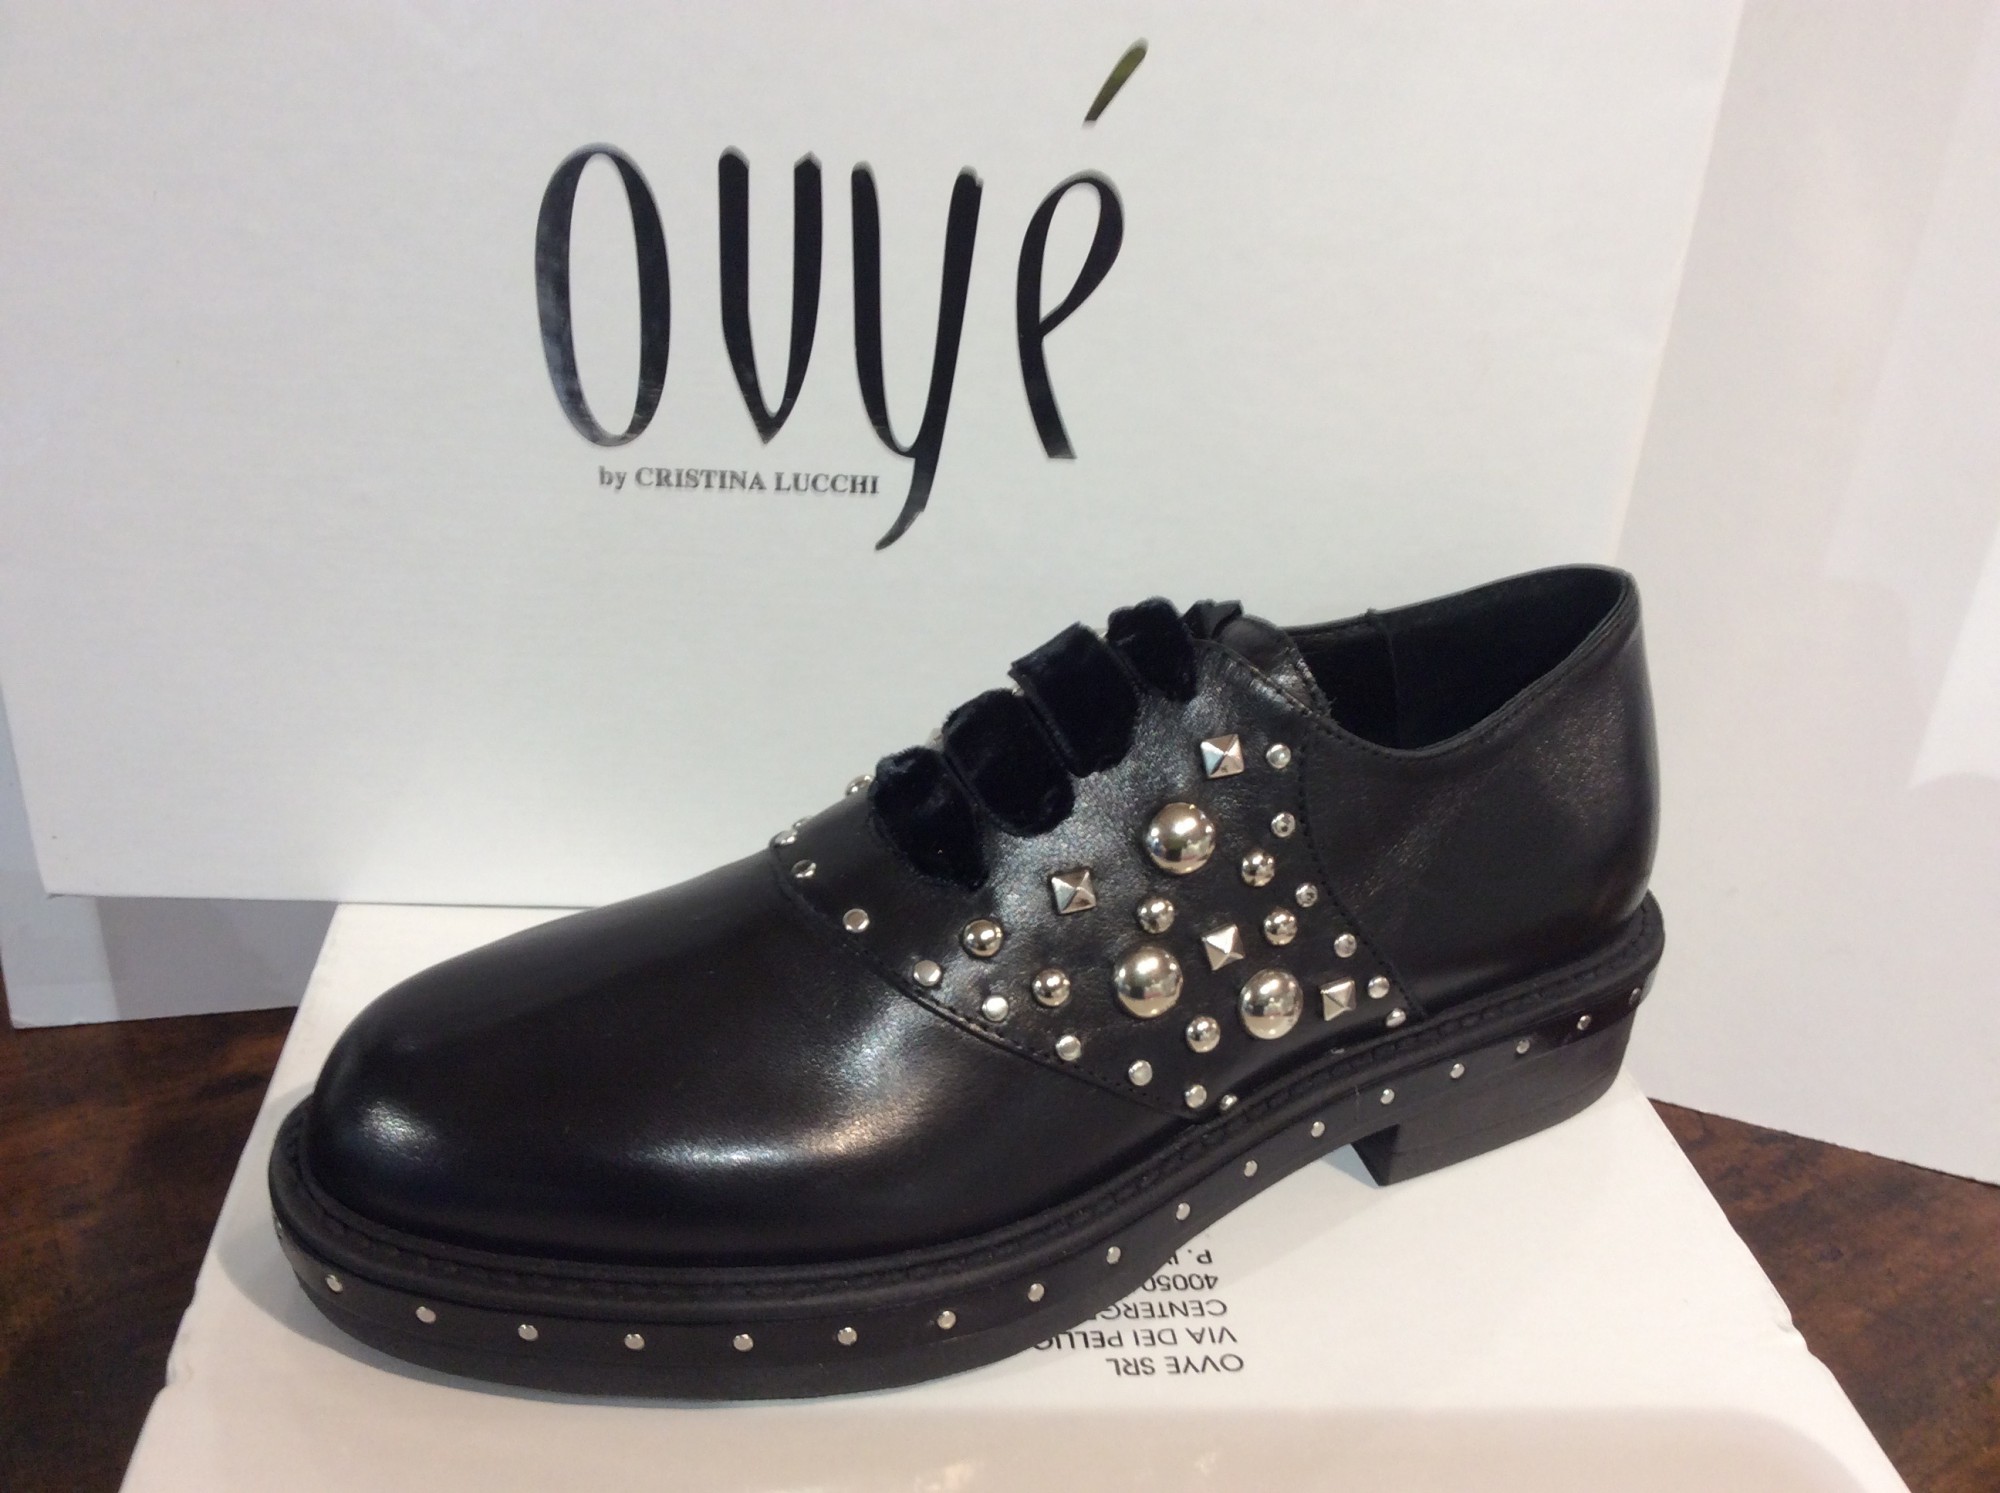 Vendita Ovye' scarpe - francesina donna mod. g224, vendita online Ovye'  scarpe - francesina donna mod. g224 | Tempus Doni